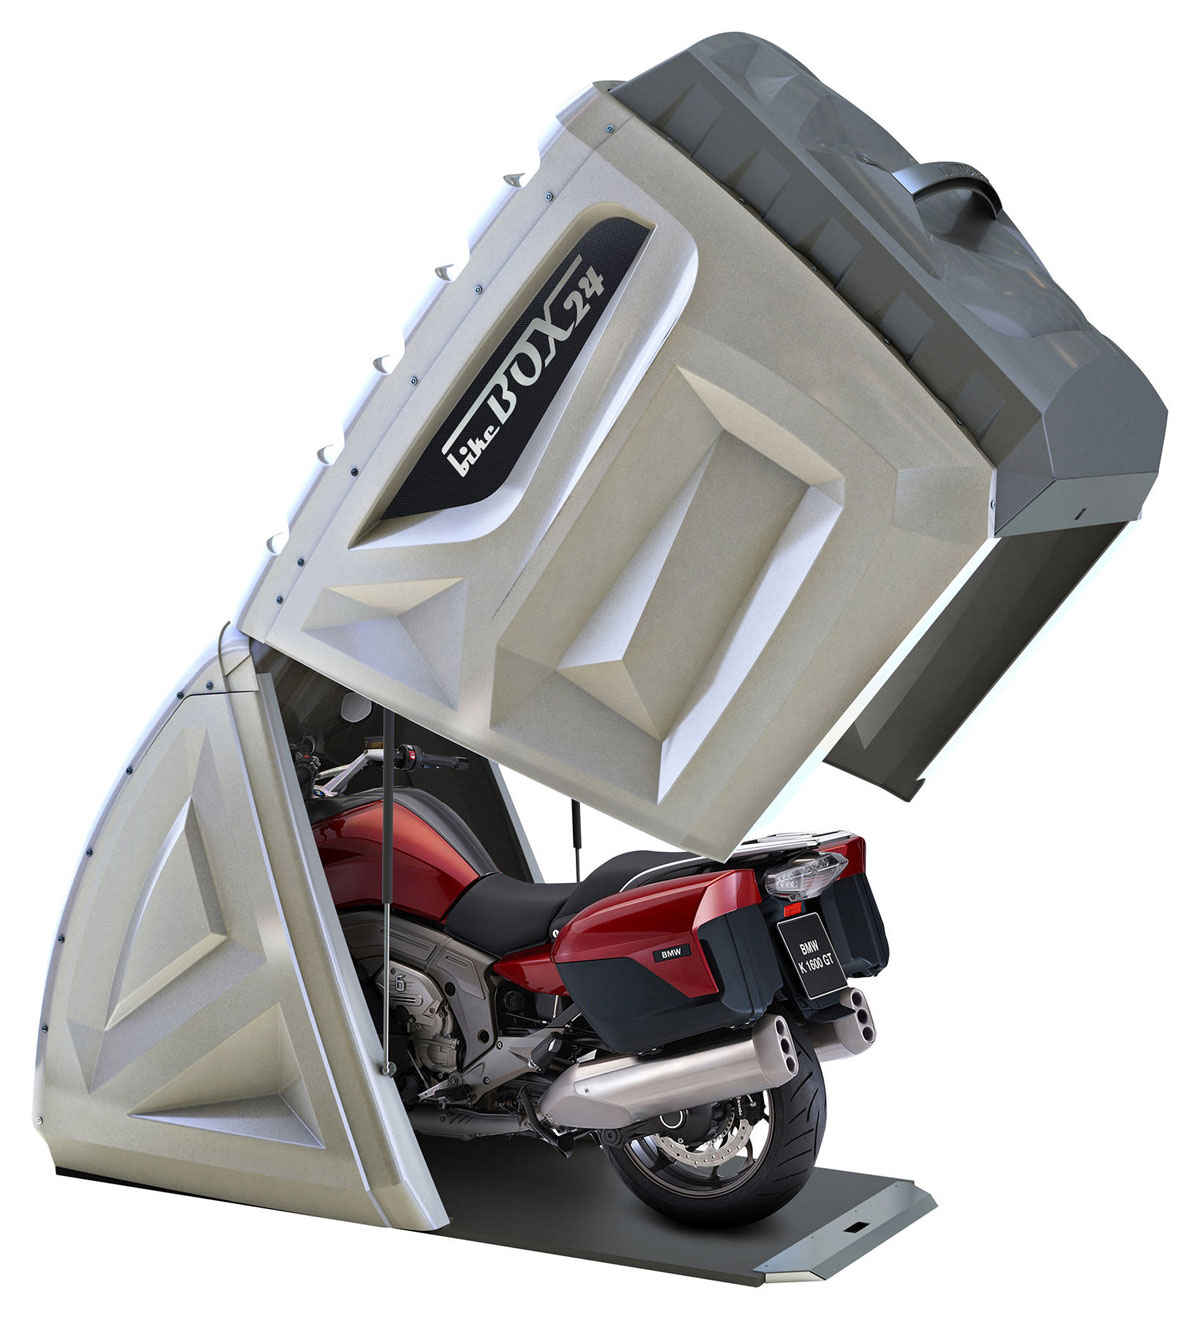 Garage moto - Abri Moto - Abri pour moto - Rangement moto - Moto